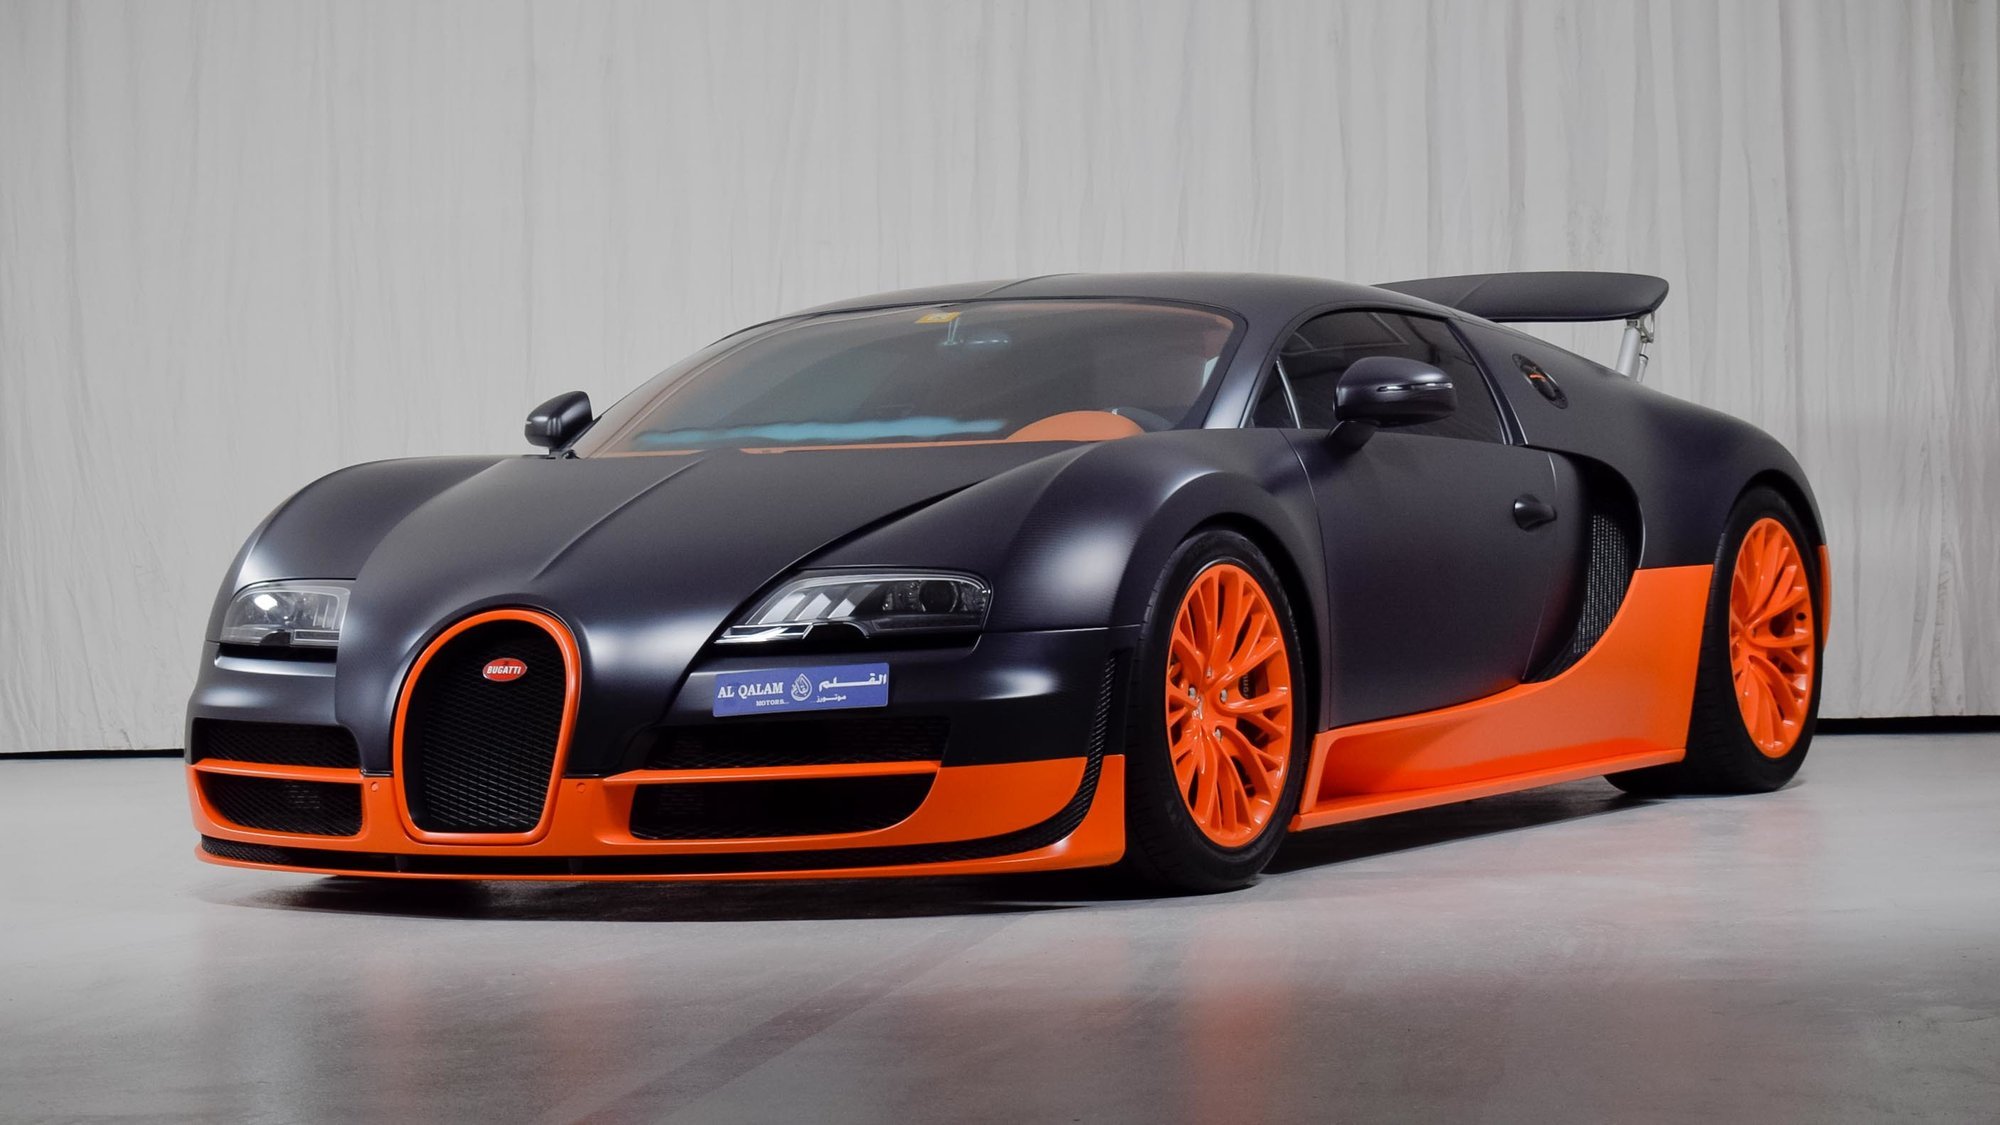 Супер быстрые машины. Бугатти Вейрон 16 4 super Sport. Автомобиль Bugatti Veyron 16.4. Бугатти 16.4 супер спорт. Bugatti Veyron 16.4 super Sport Black.